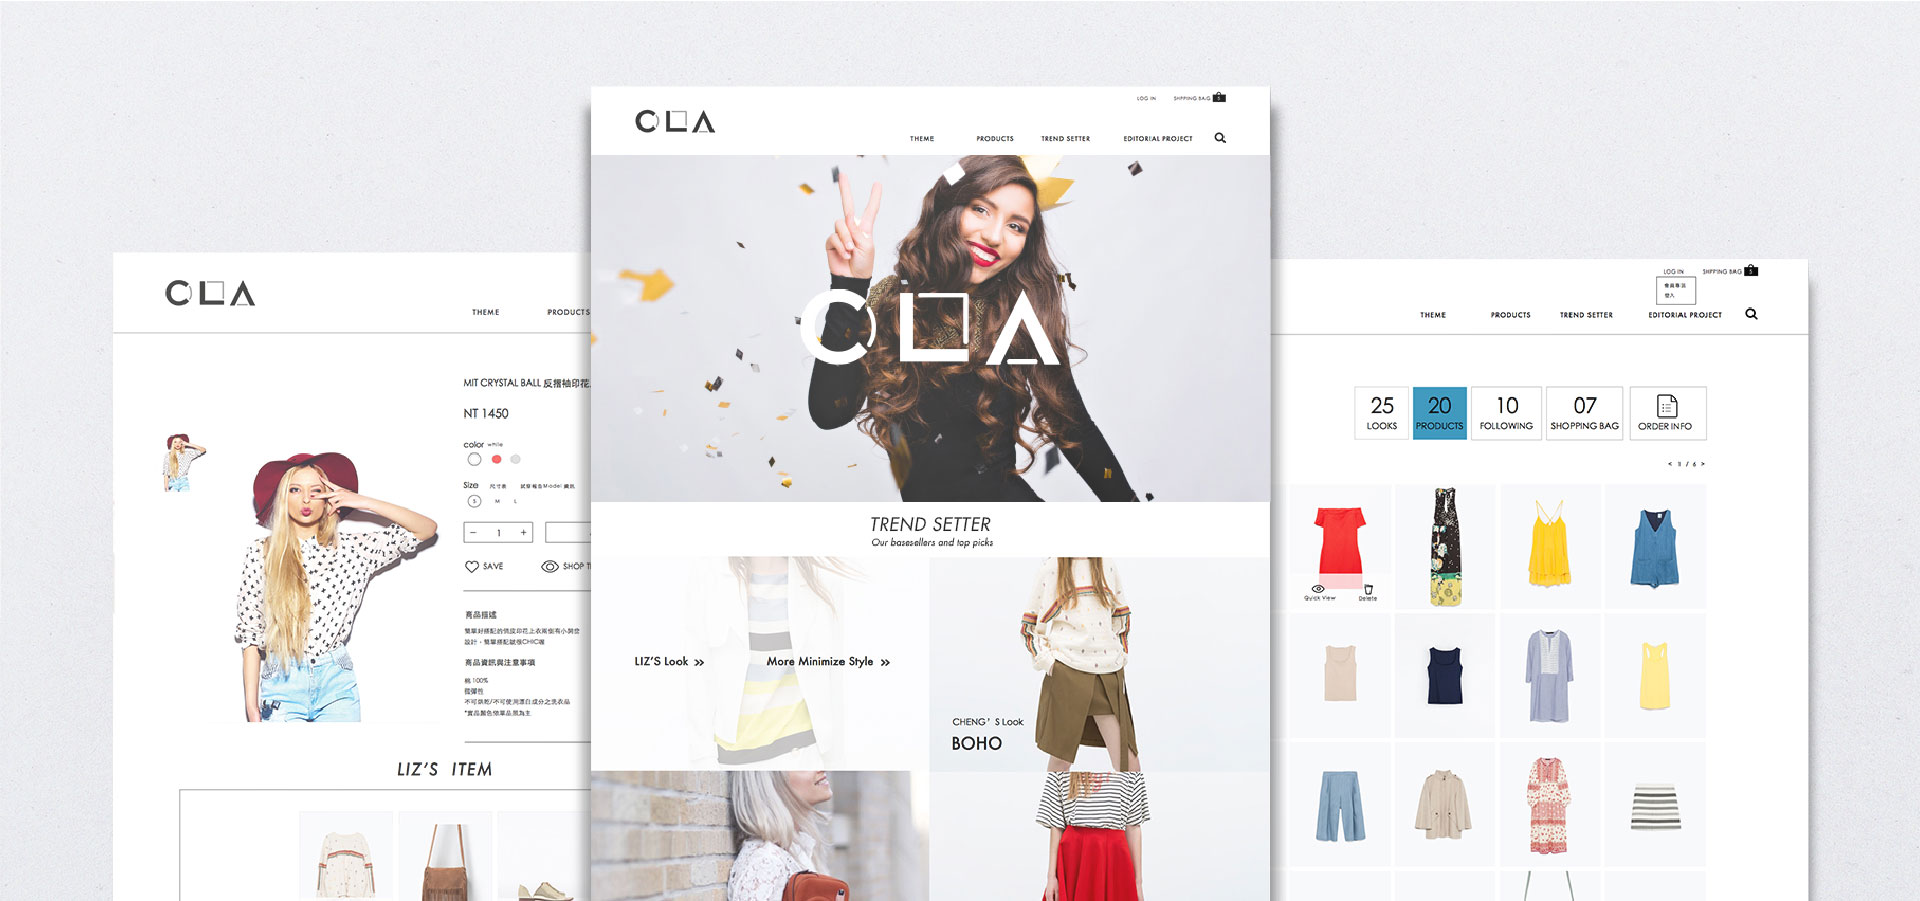 60CLA 19 | CLA服飾電商品牌建構專案 | Labsology 法博思品牌顧問公司